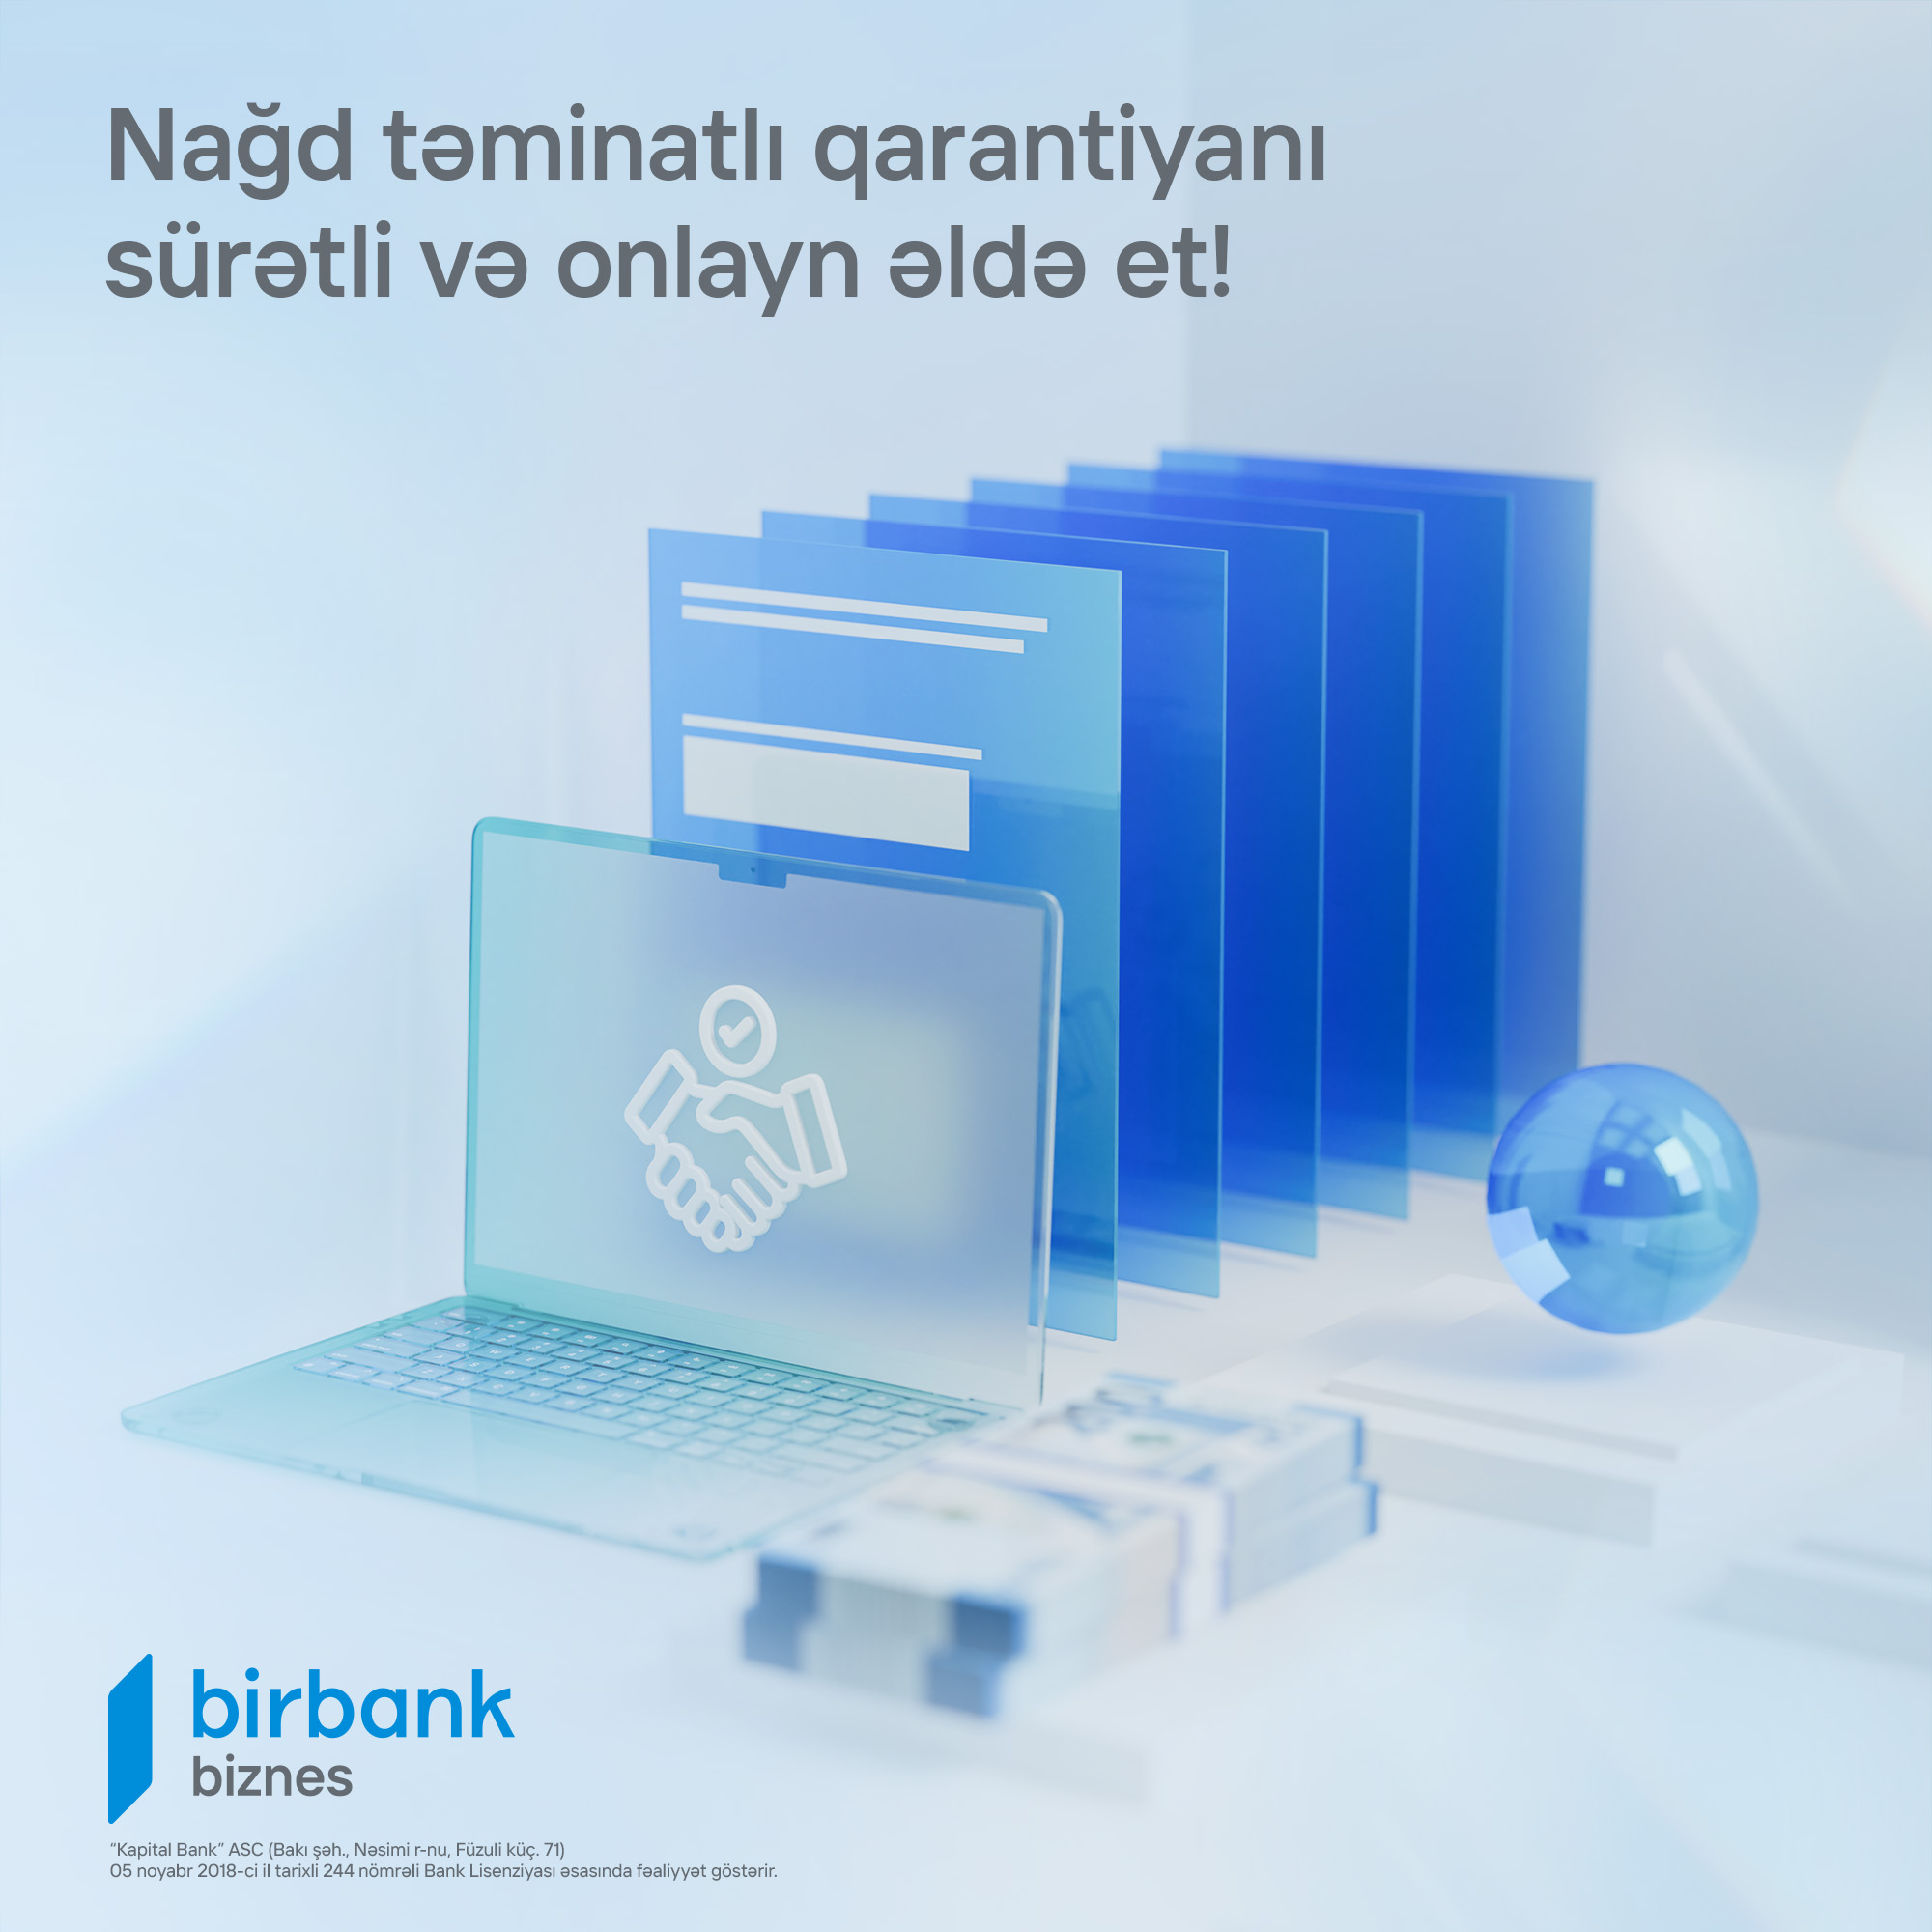 Birbank Business Presents a New 